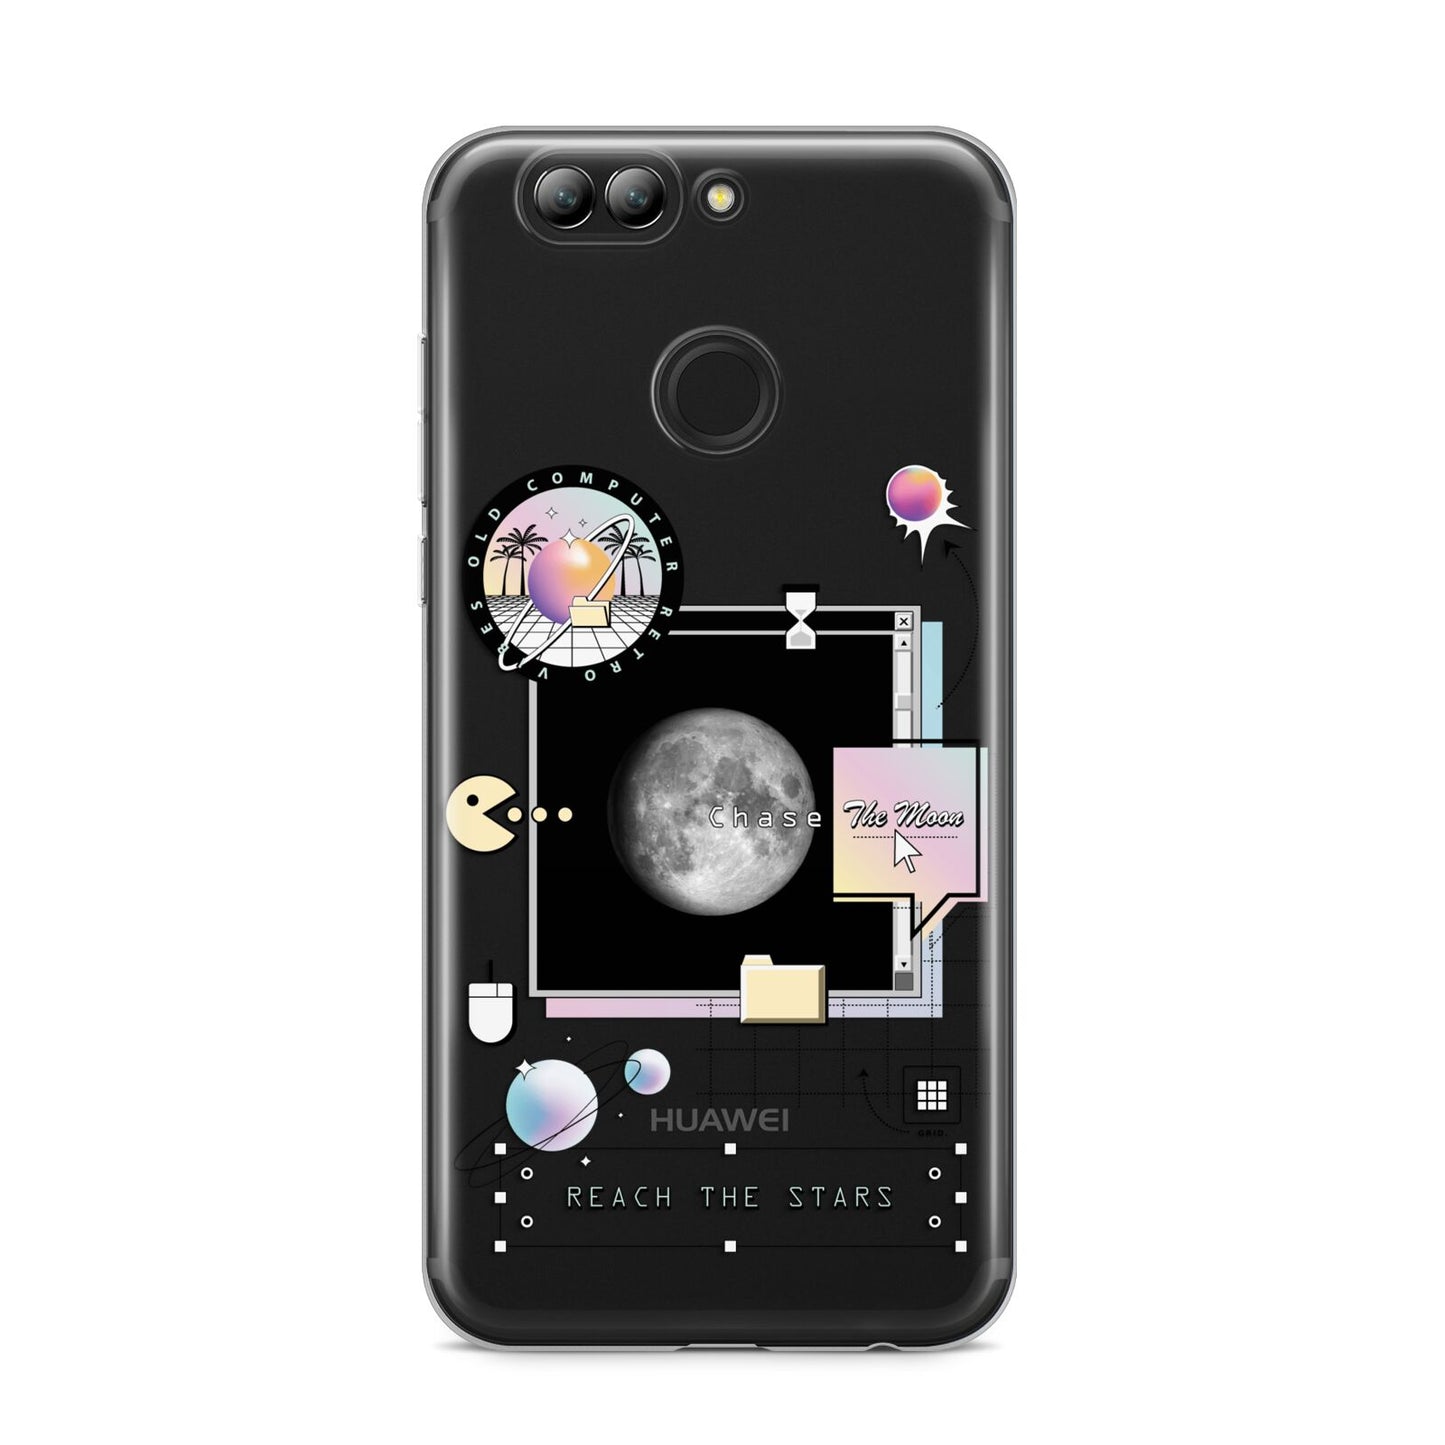 Chase The Moon Huawei Nova 2s Phone Case